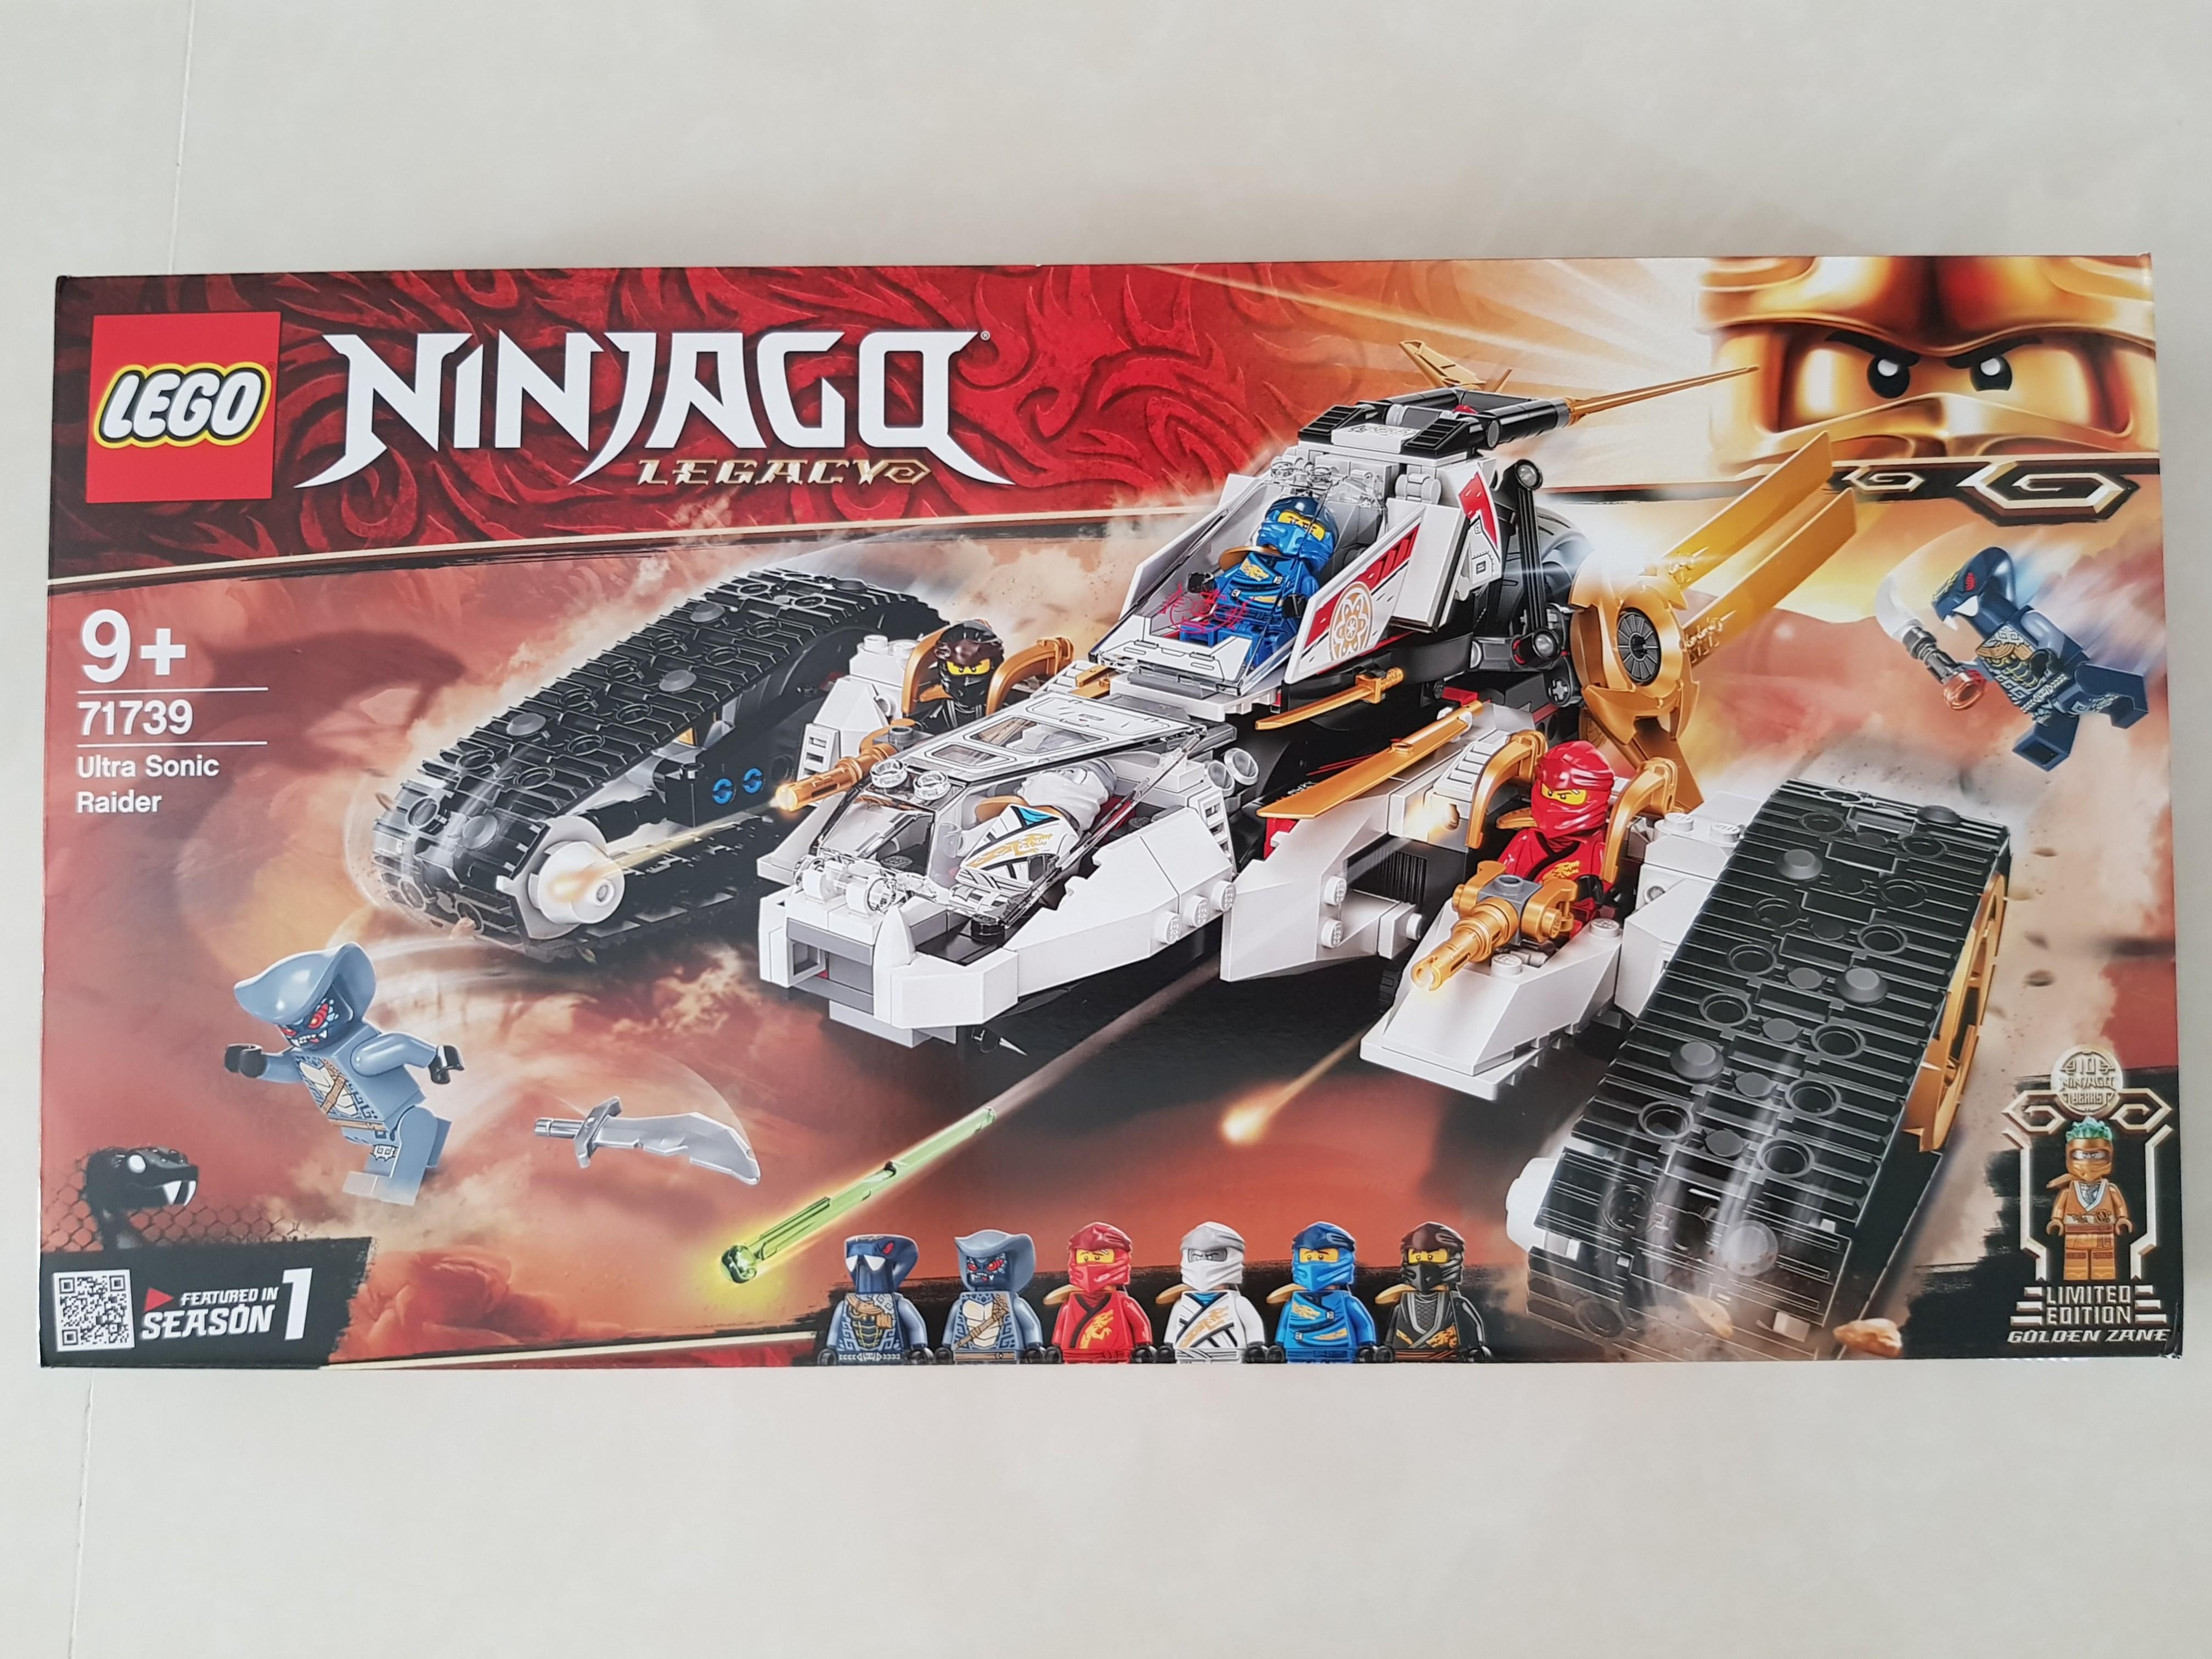  LEGO NINJAGO Legacy Ultra Sonic Raider 71739 Ninja Toy